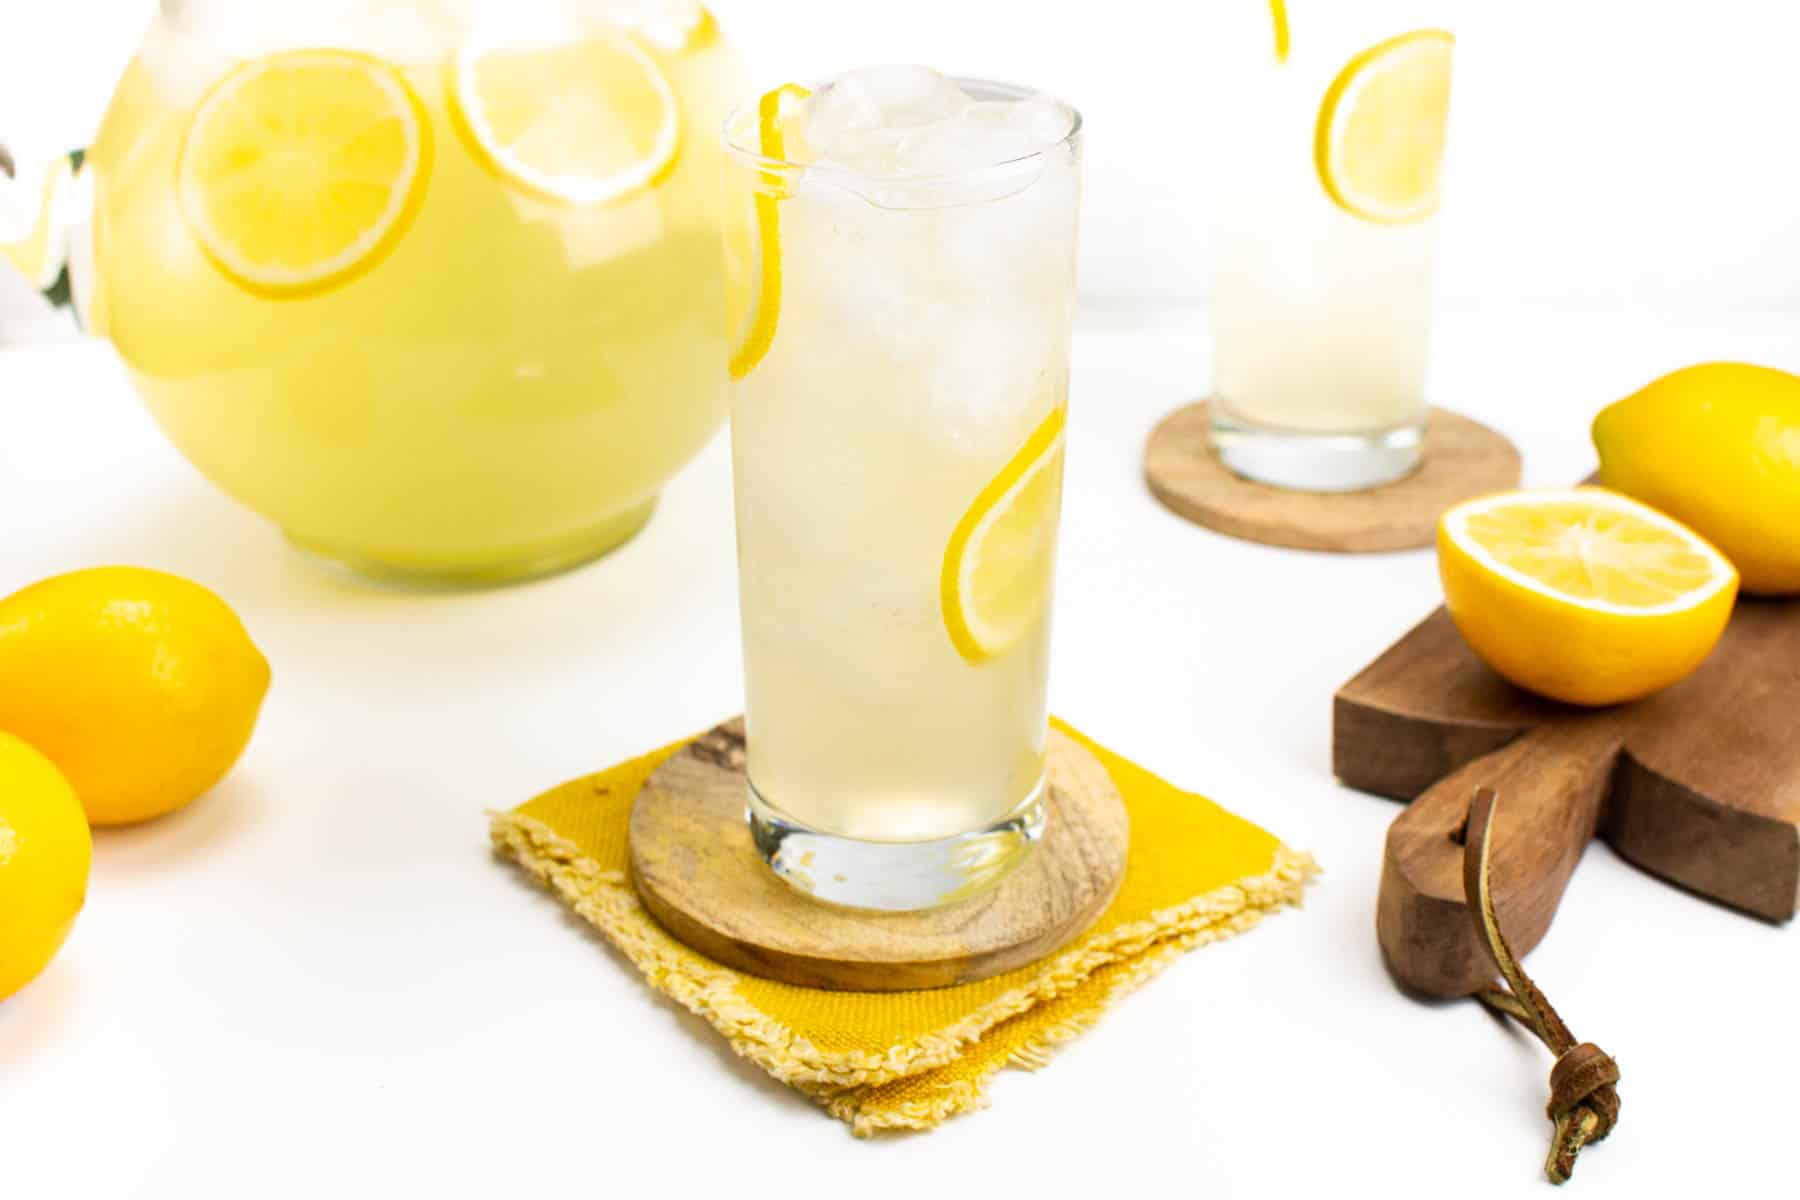 a glass of lemonade on a yellow fabric coaster.